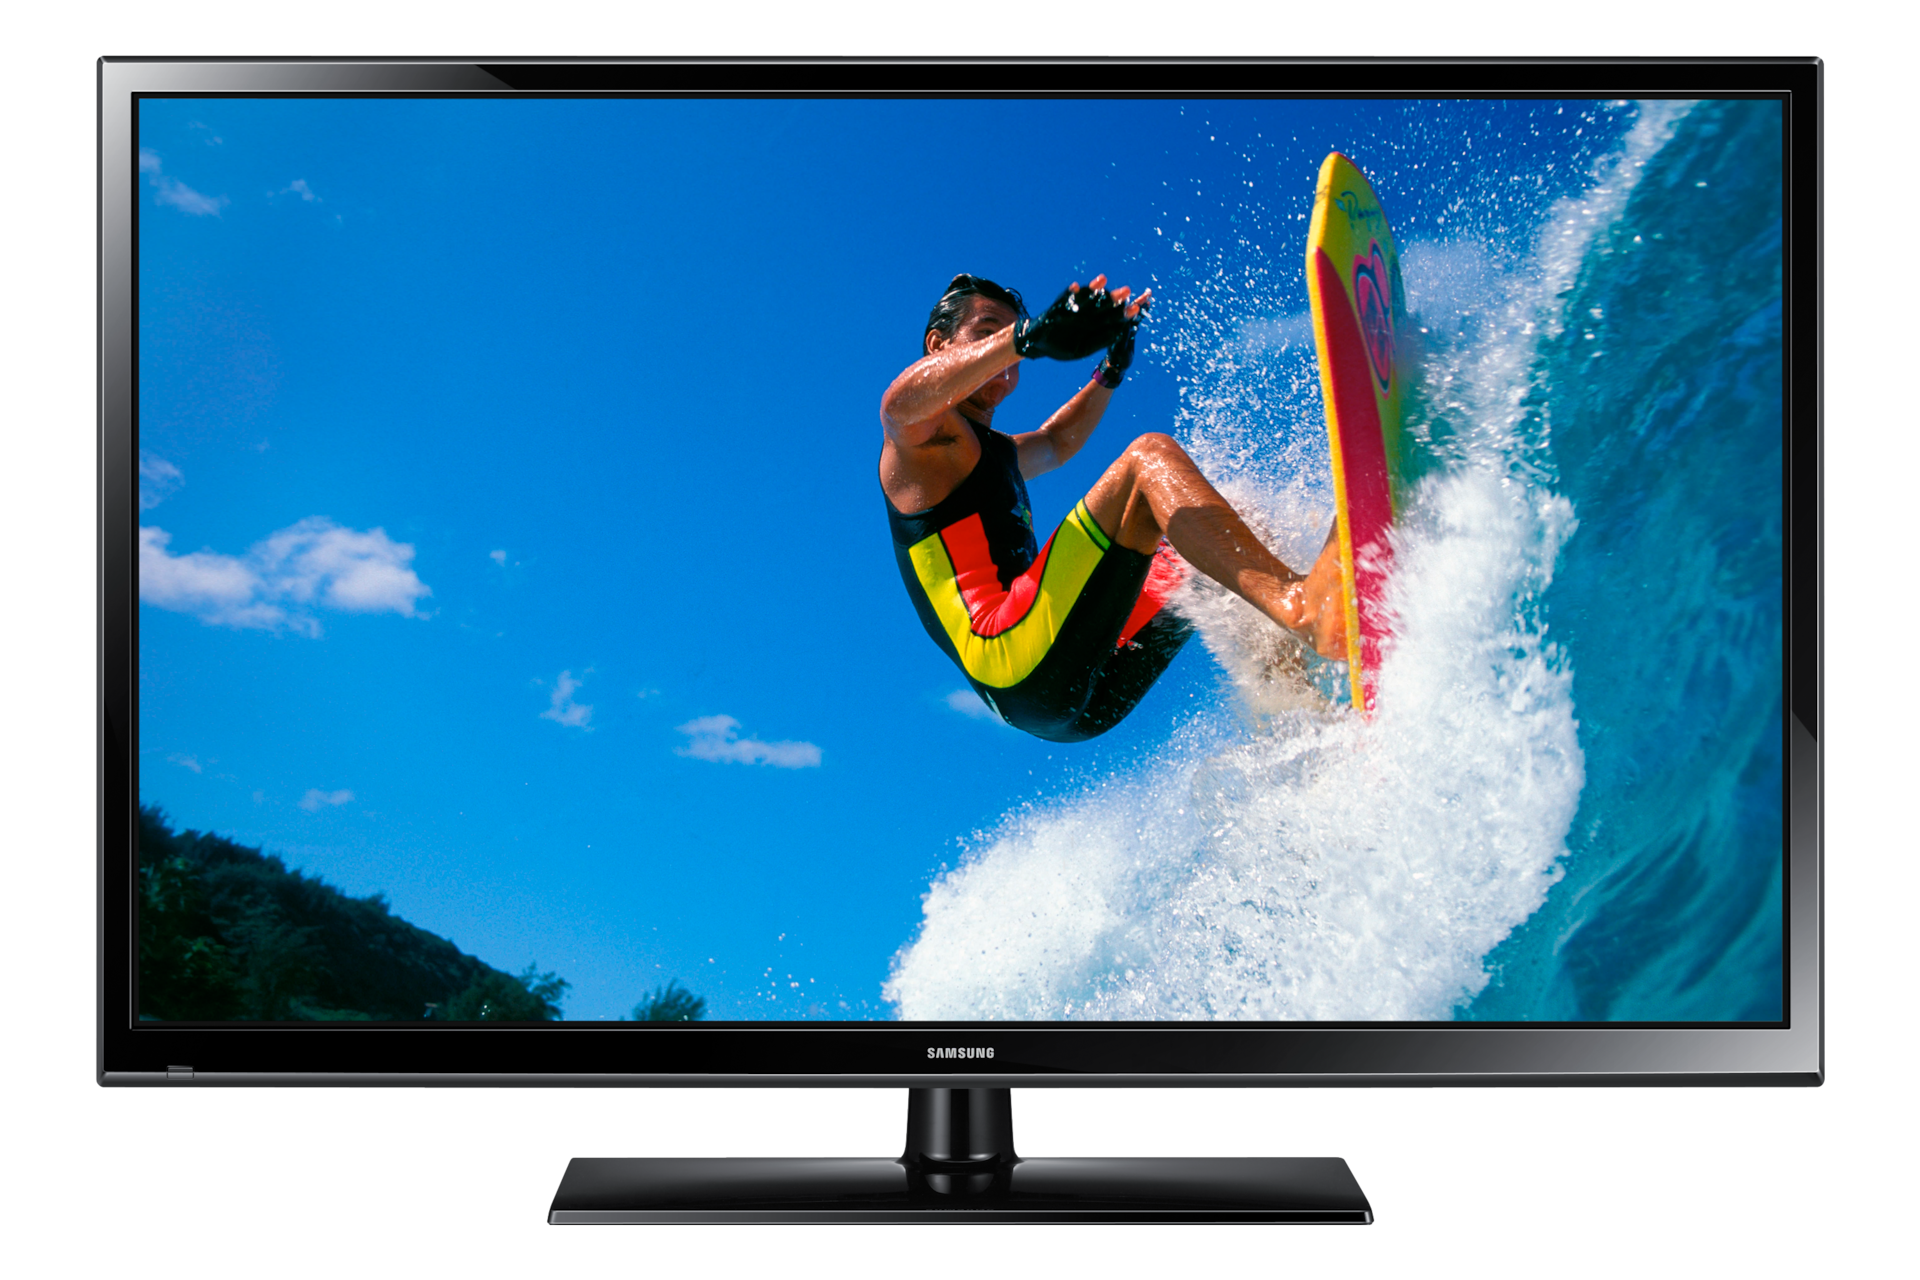 Samsung 51 Inch H4500 Series 4 Plasma Tv With Football Mode